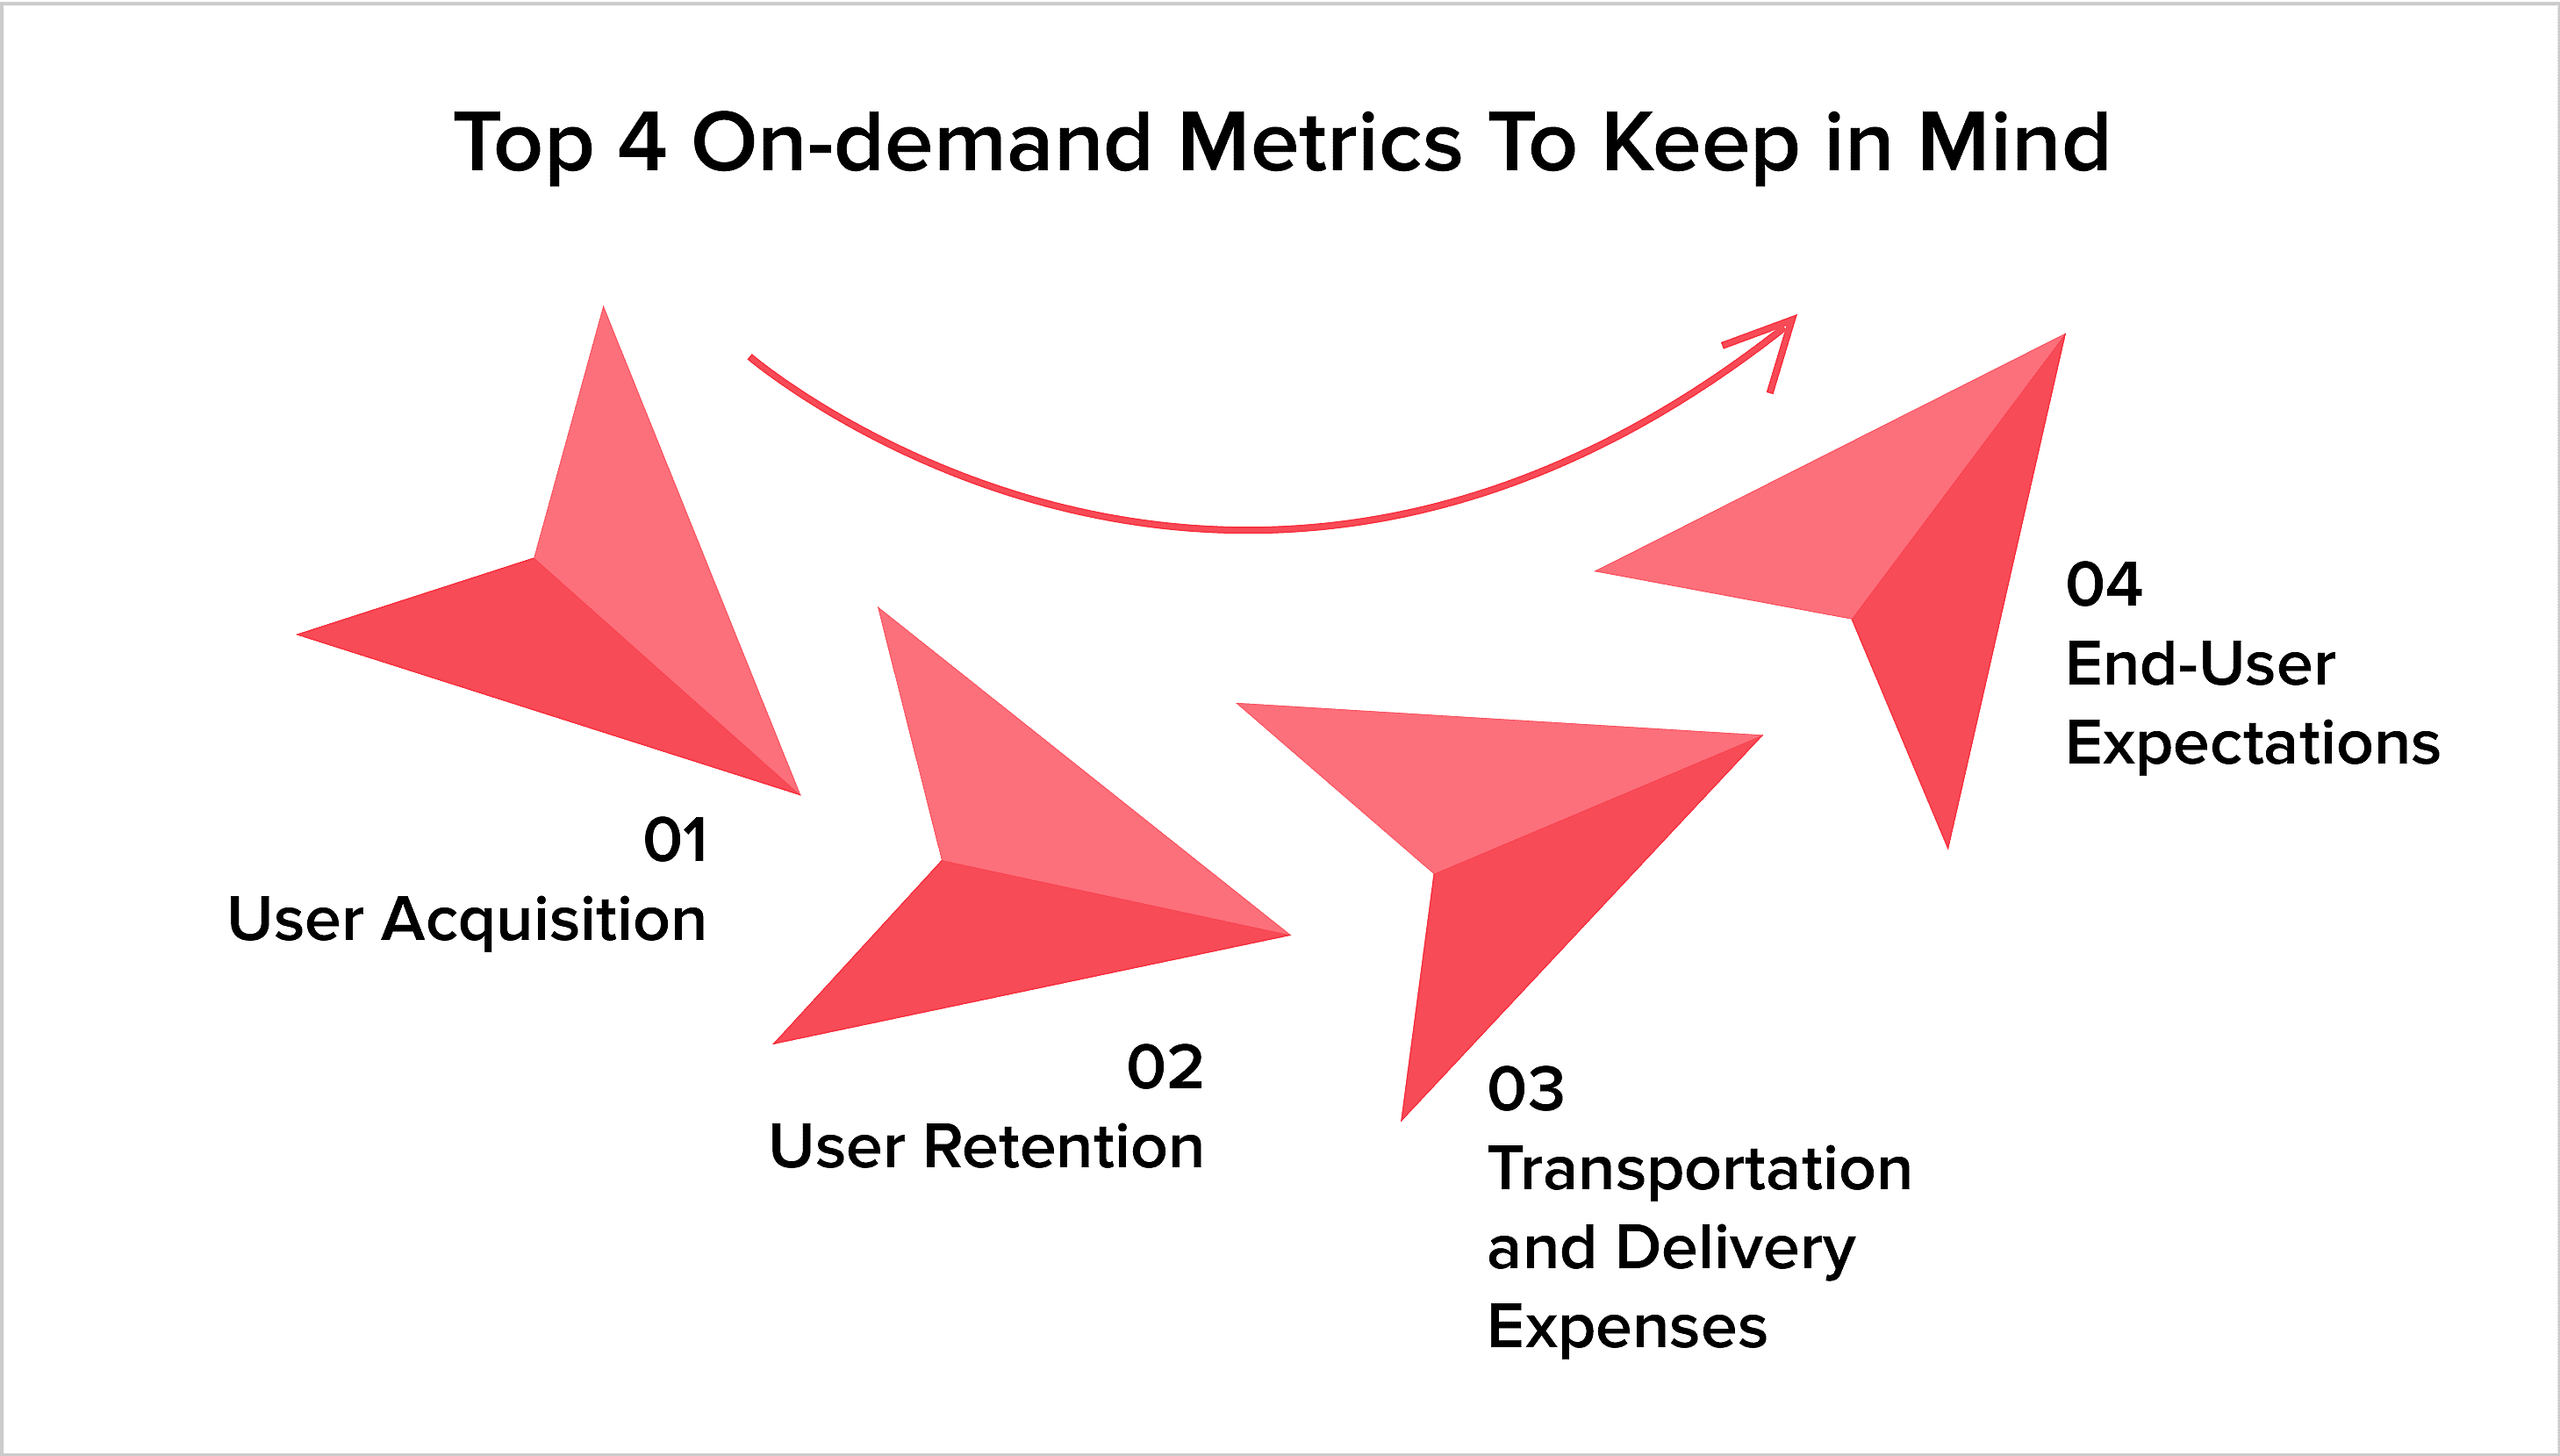 Top 4 On-demand Metrics To Keep in Mind